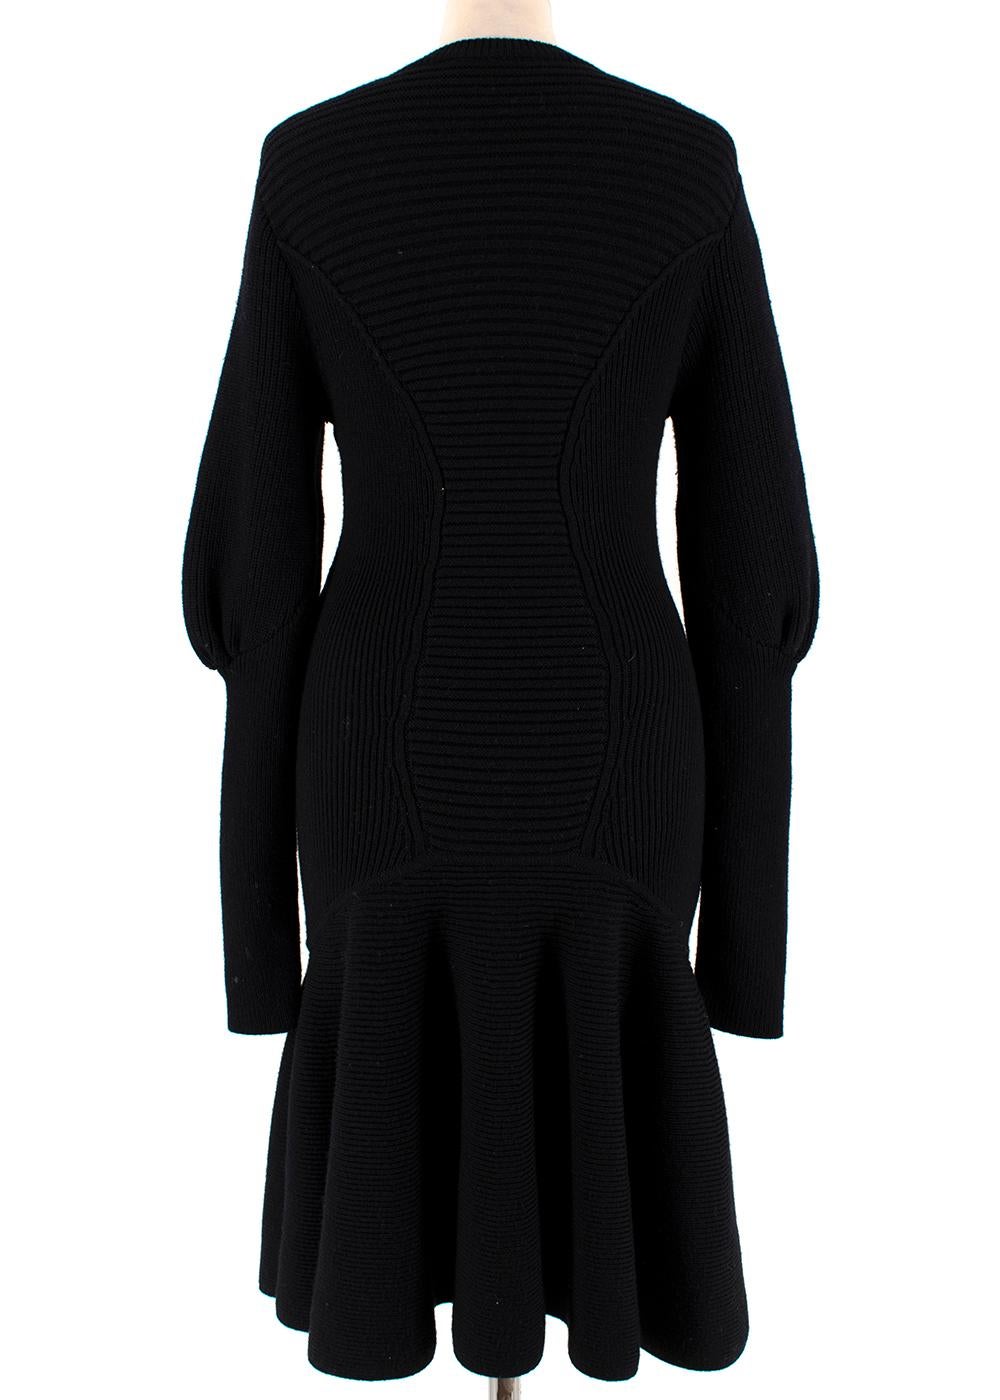 Alexander McQueen Knitted Black Peplum Dress

- Tight fitted around the upper body
- Chunky-knit with horizontal stripe
- Medium weight
- Peplum skirt
- Round neckline
- Puff sleeves & slim cuffs
- Warm blend of wool 

Fabric Composition:
100% Wool